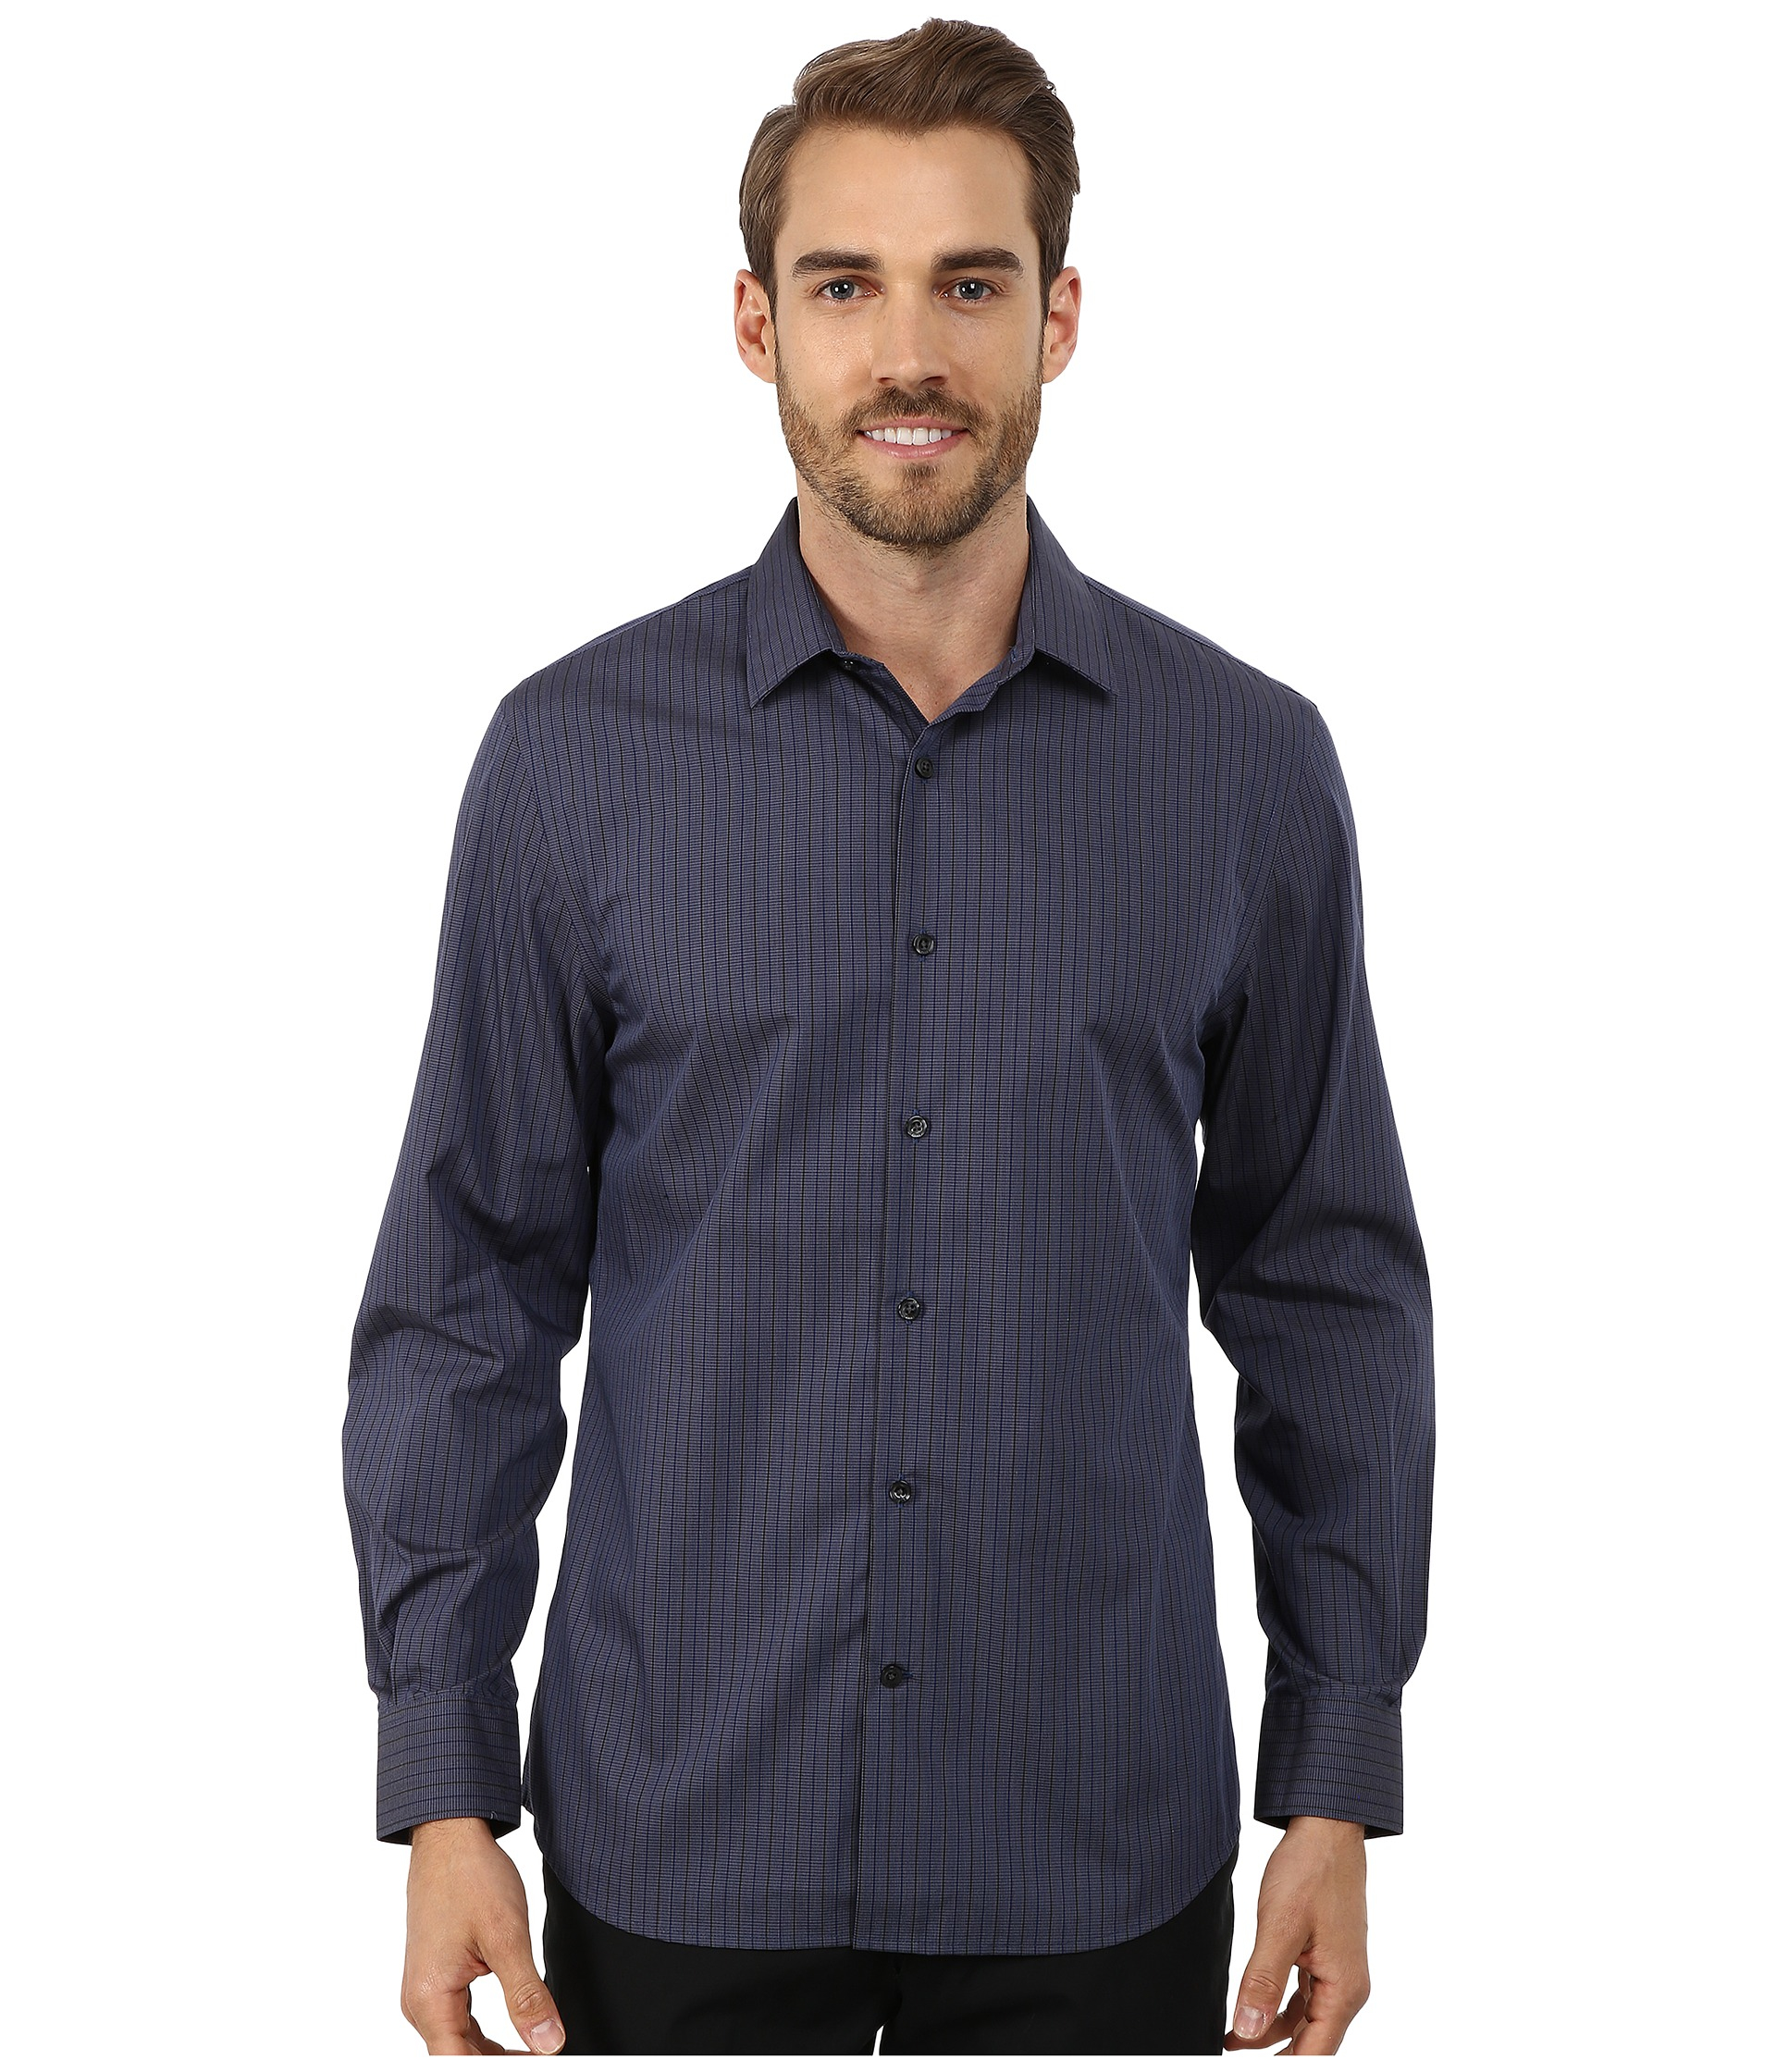 Lyst - Perry Ellis Long Sleeve Tonal Stripe Pattern Shirt in Blue for Men